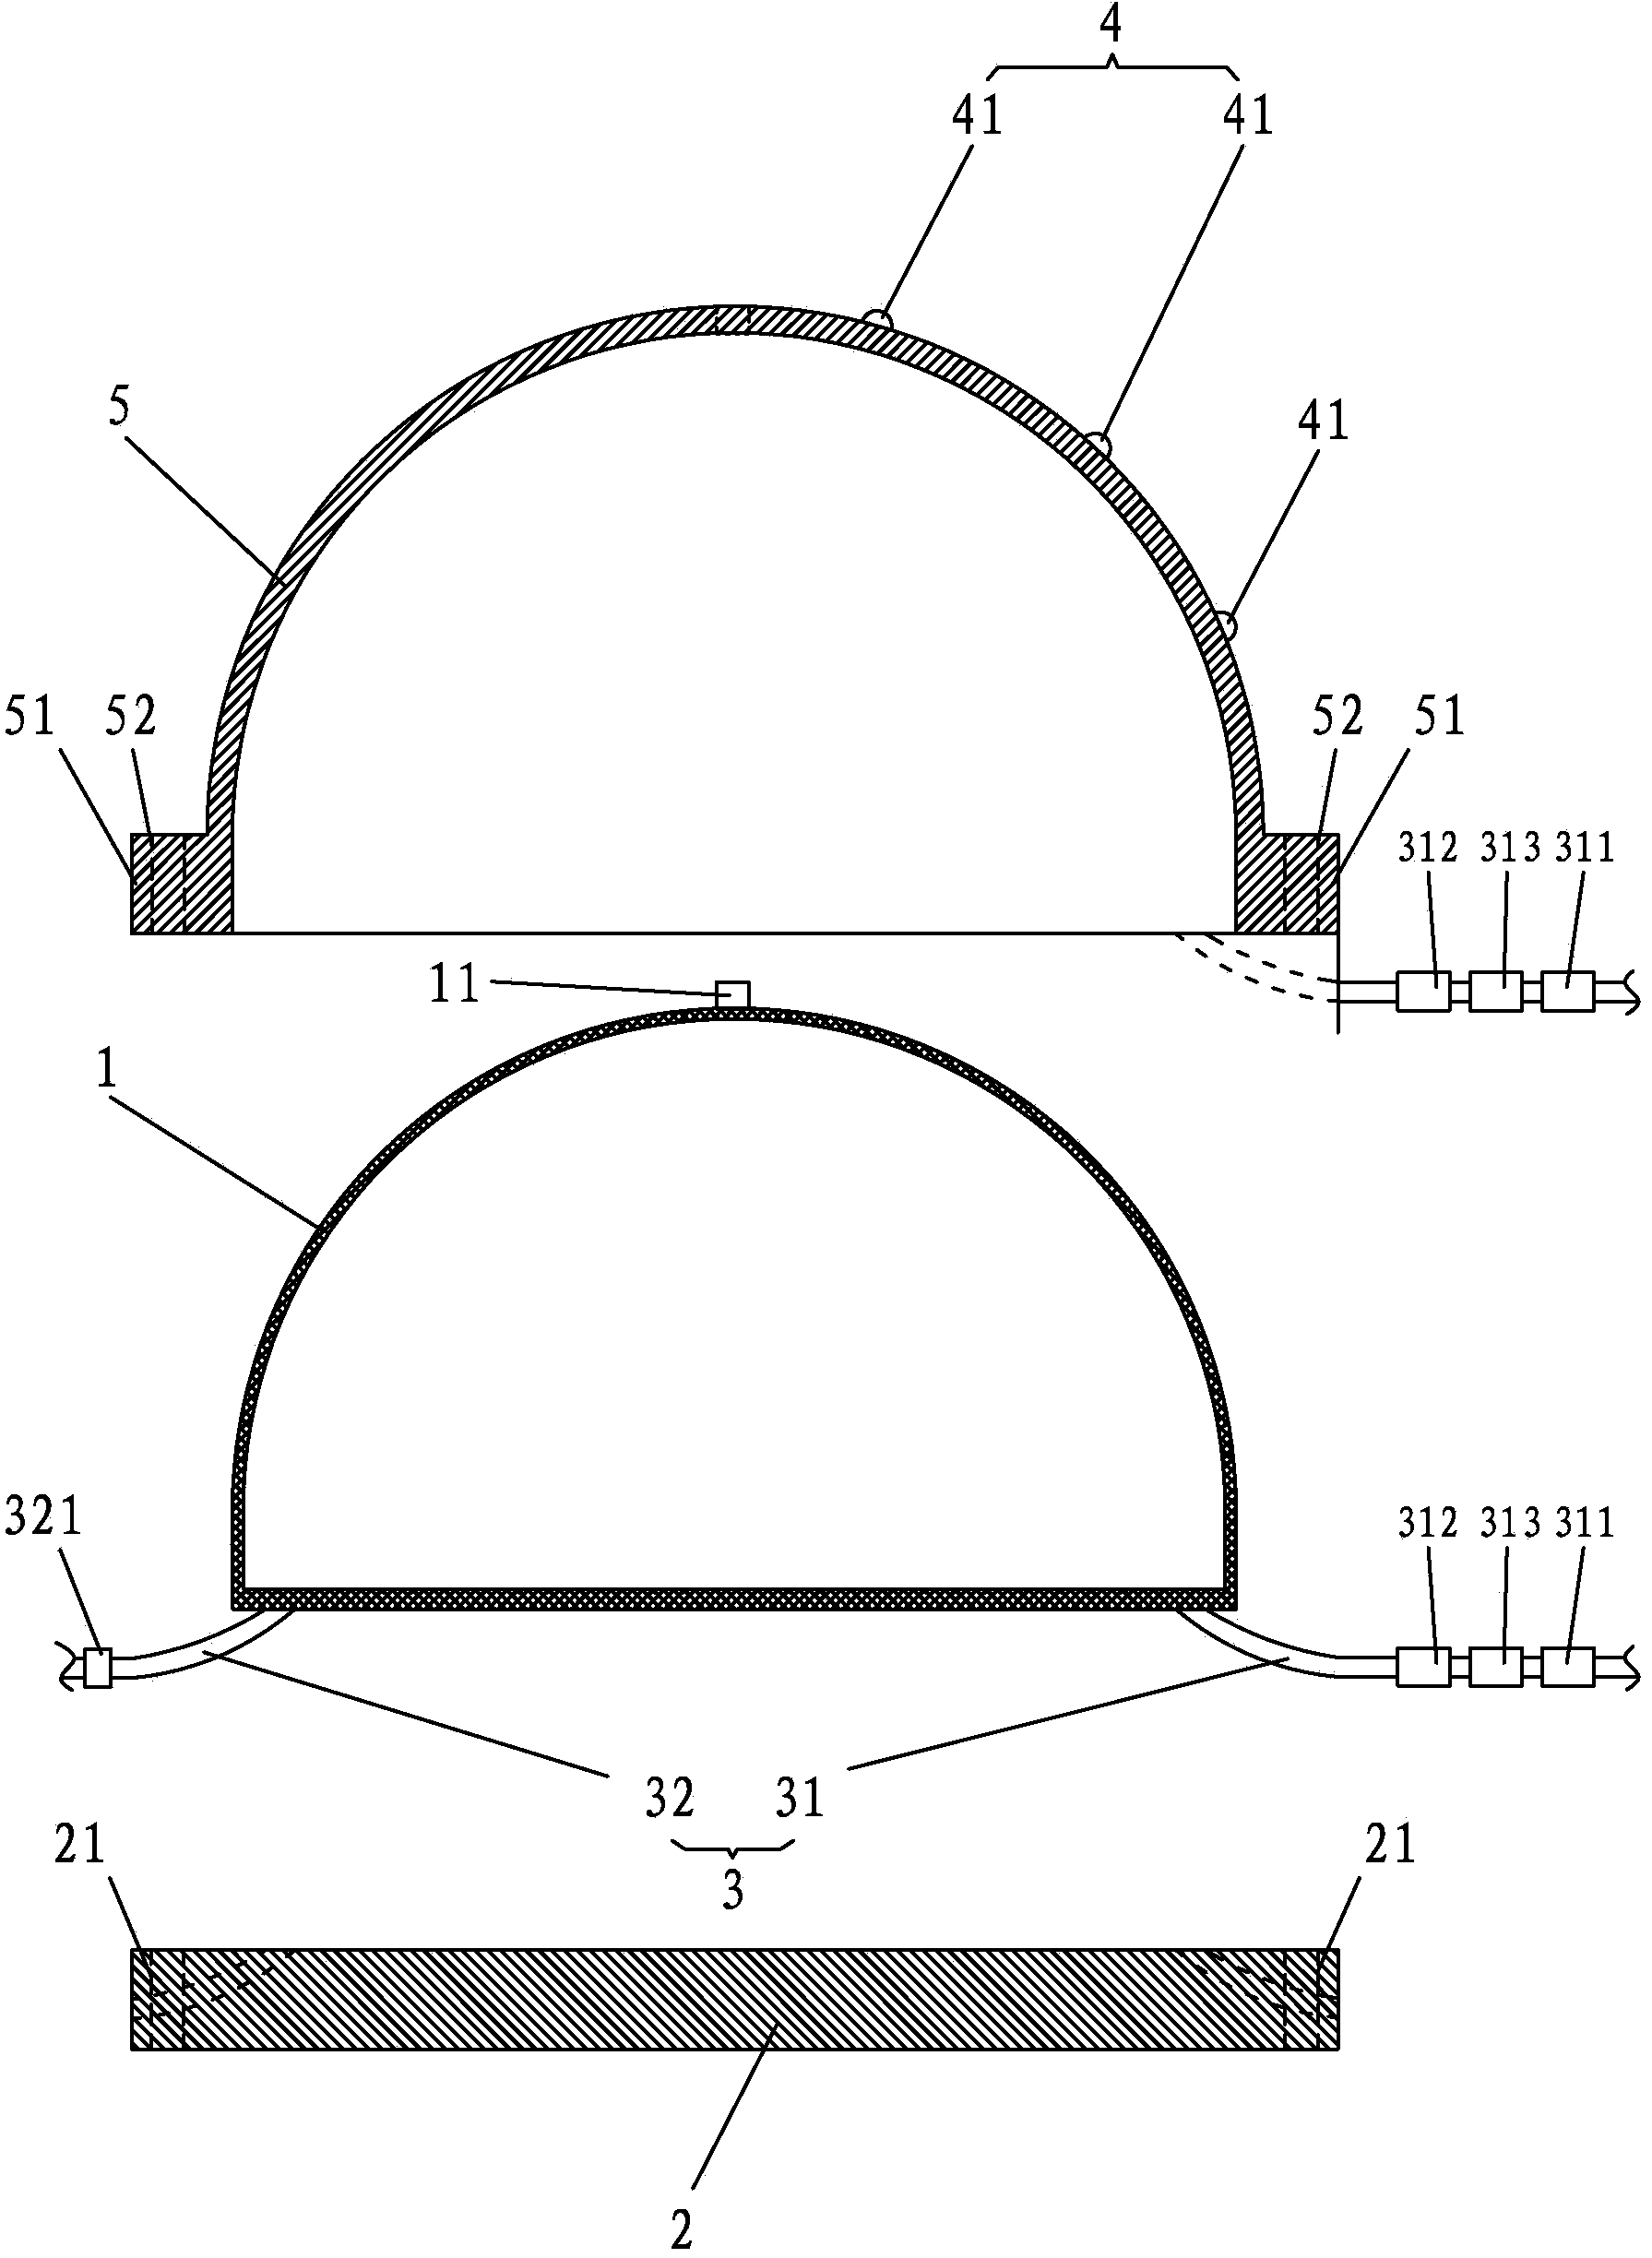 Novel inner pressure limit test device and method for concrete hemispherical shell